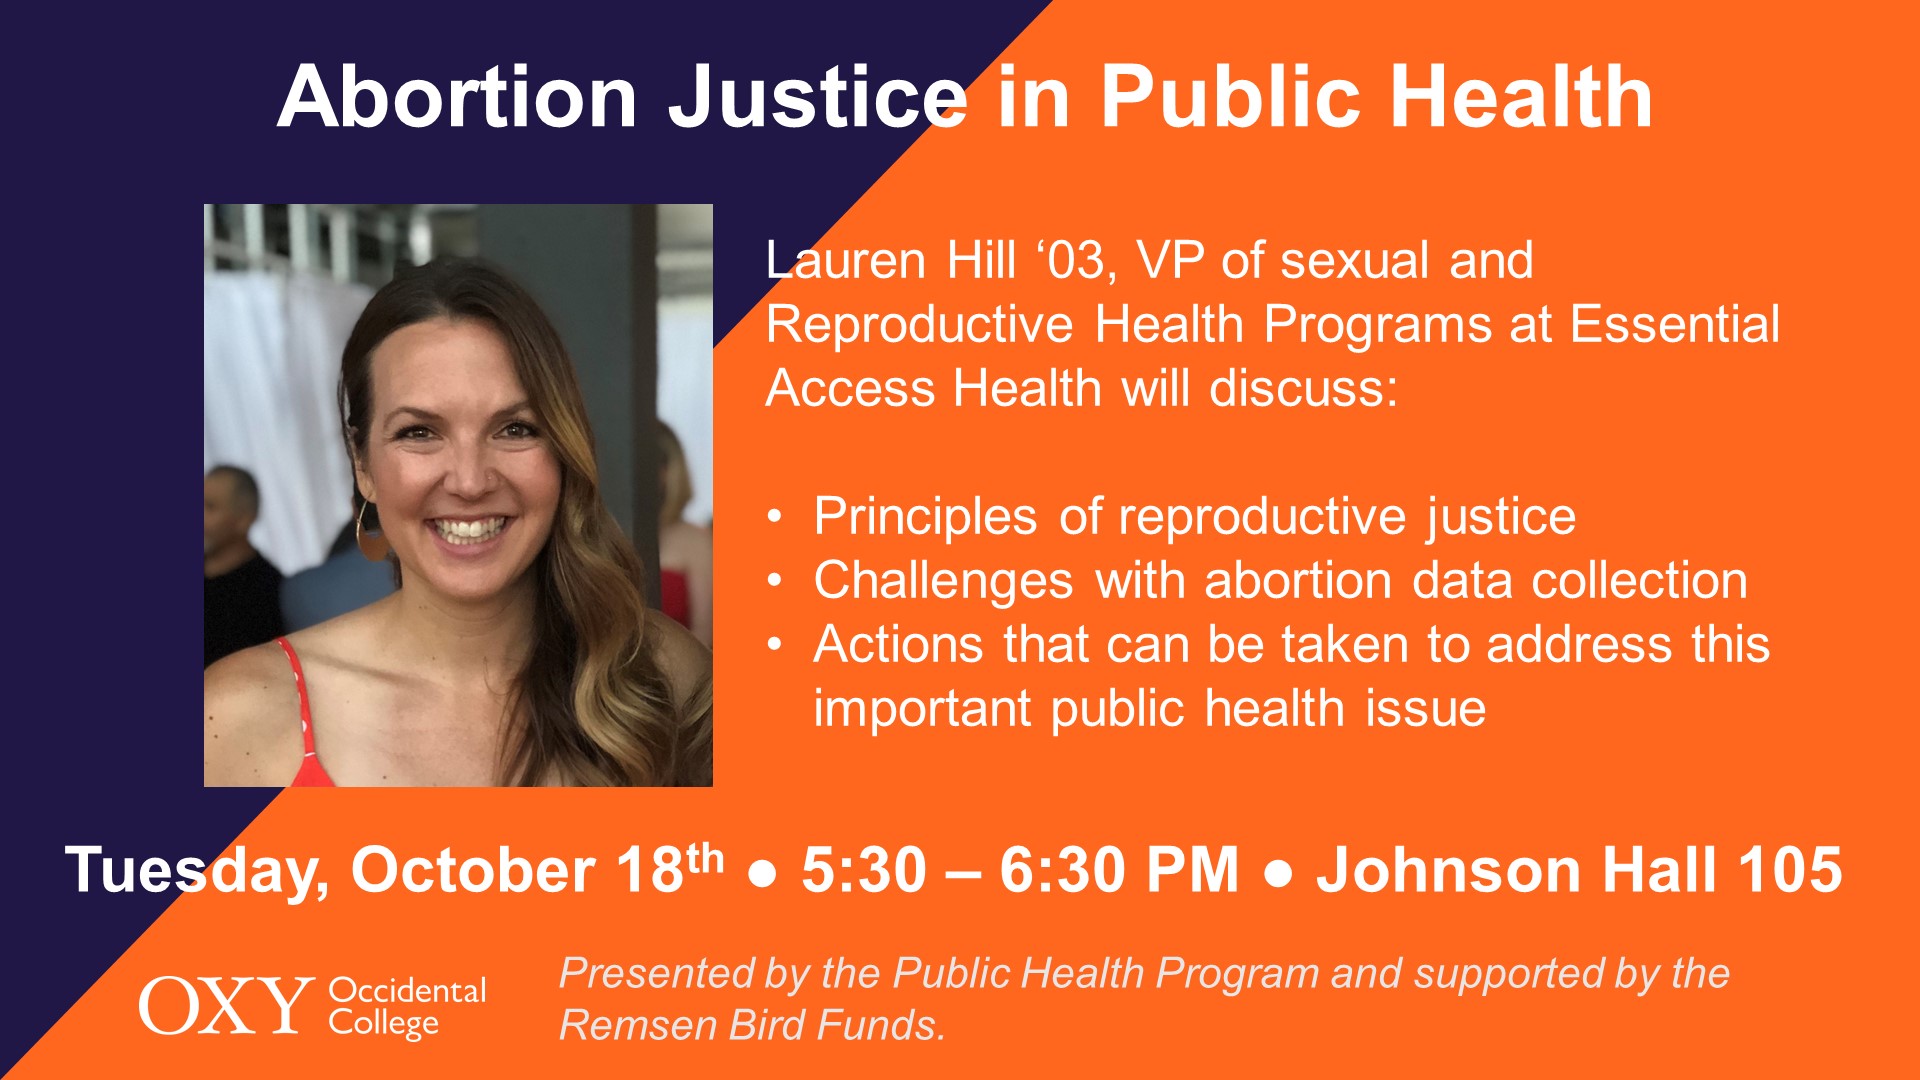 Lauren Hill '03, abortion justice in public health, October 18, 2022